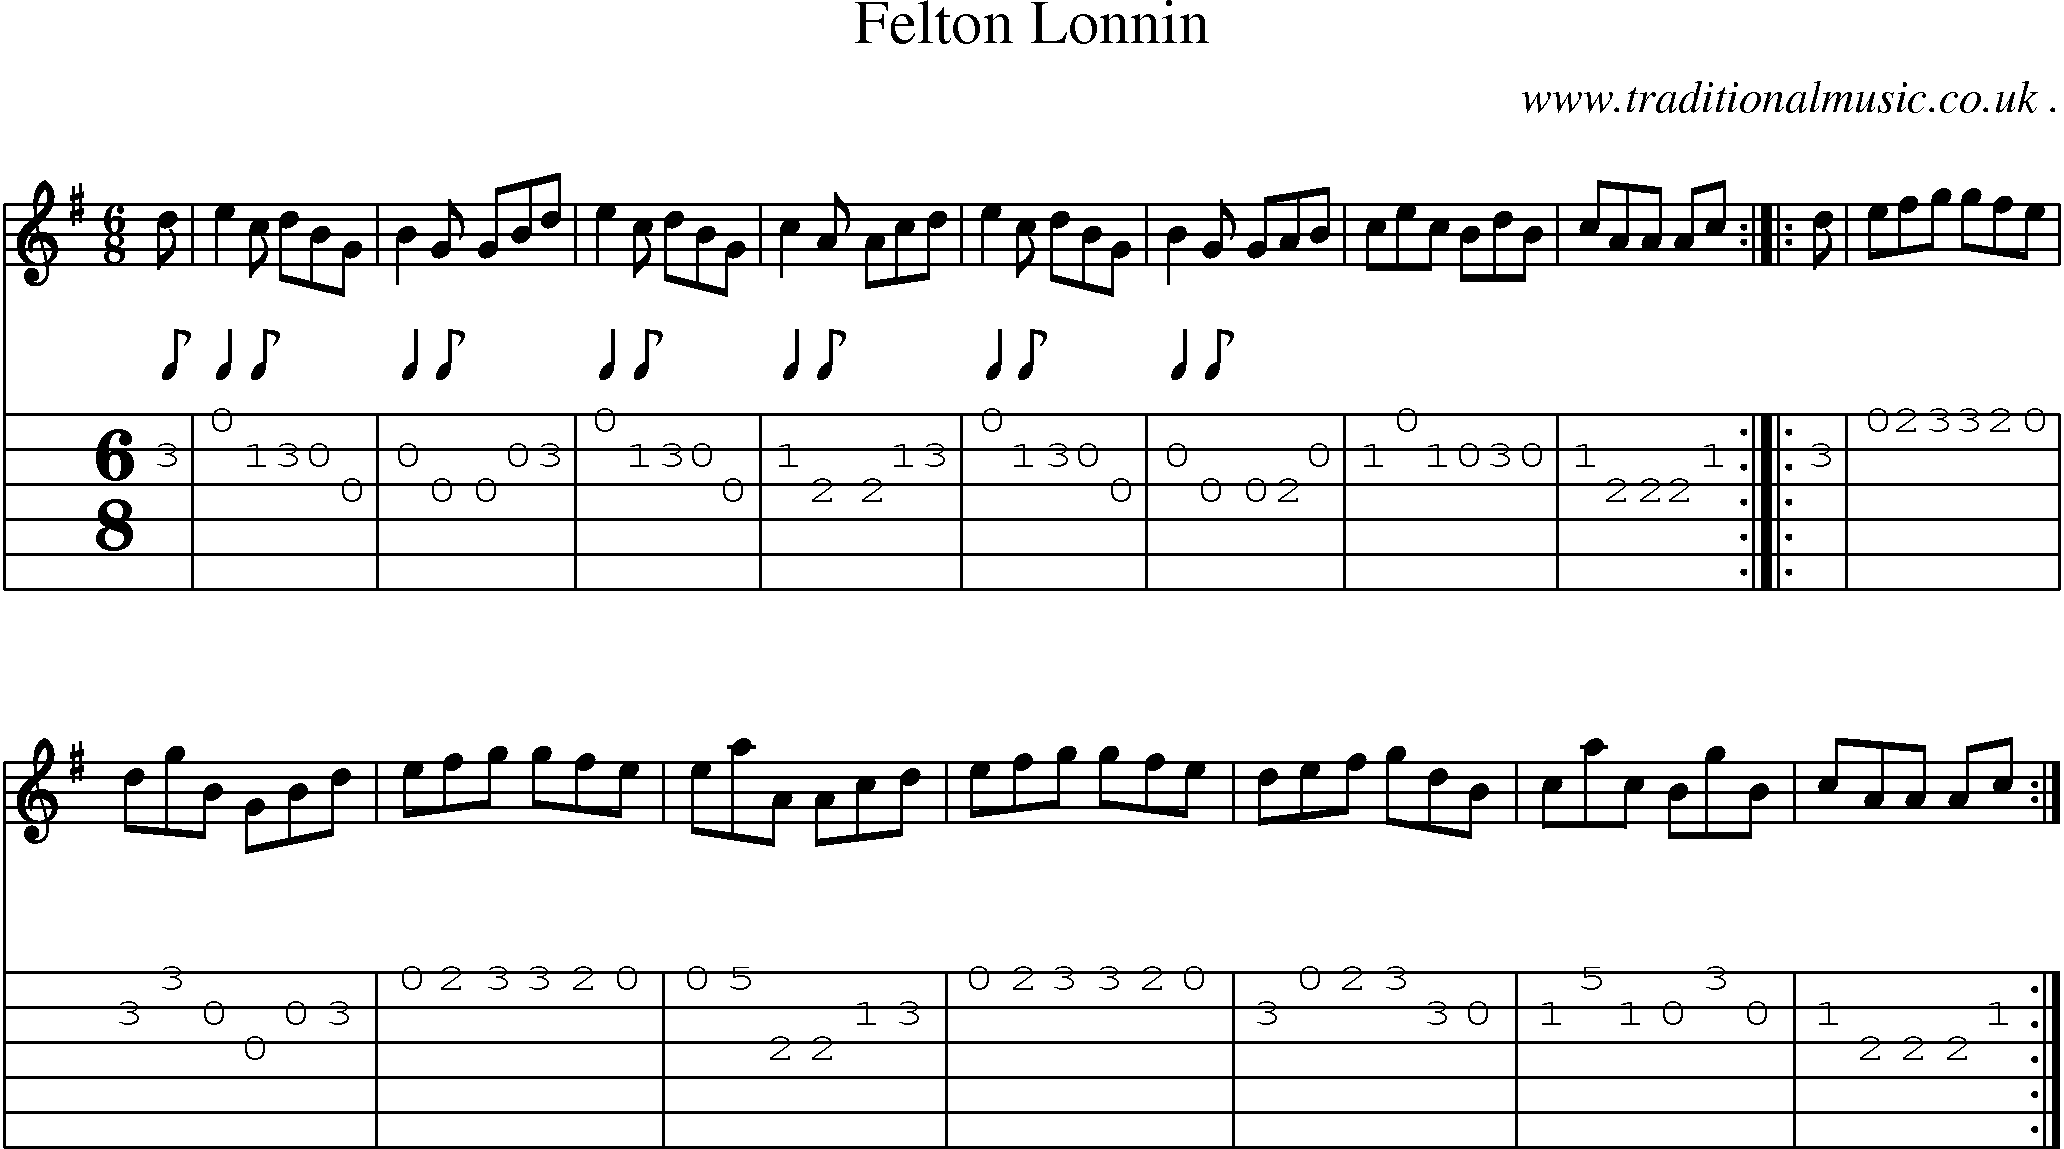 Sheet-Music and Guitar Tabs for Felton Lonnin